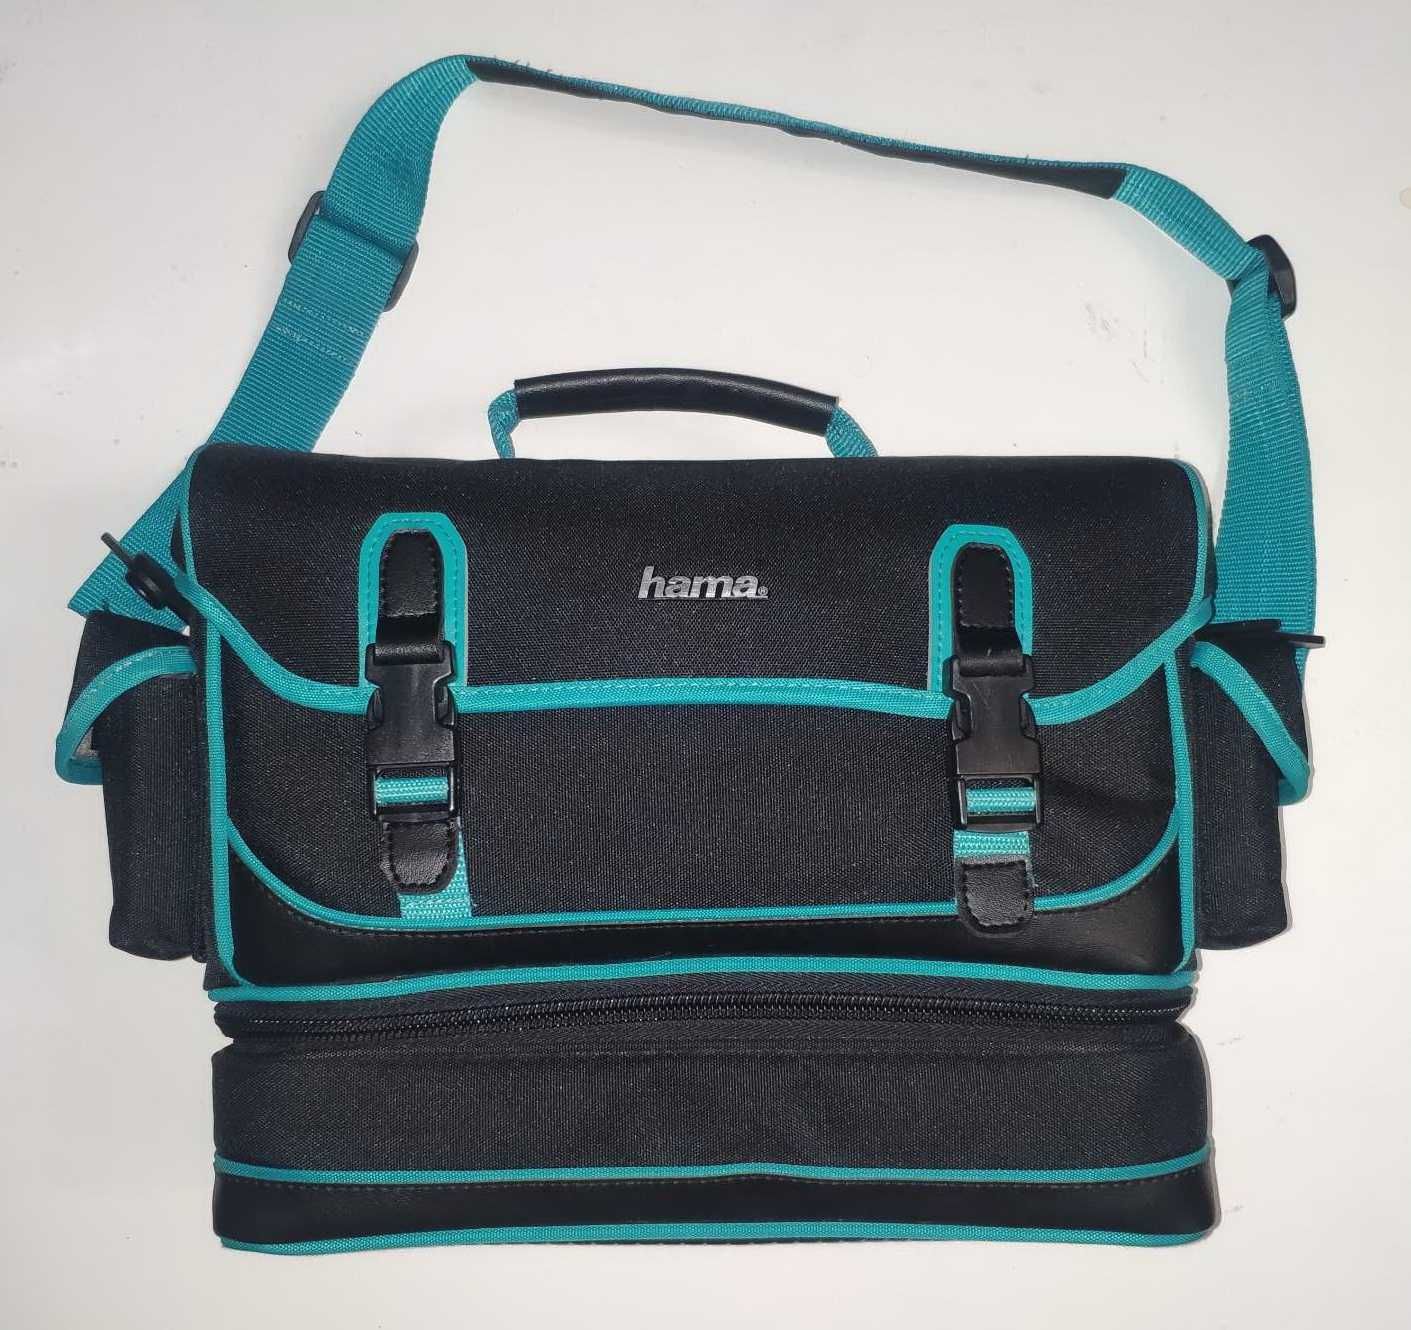 hama - фирменная сумка для фото - видео техники